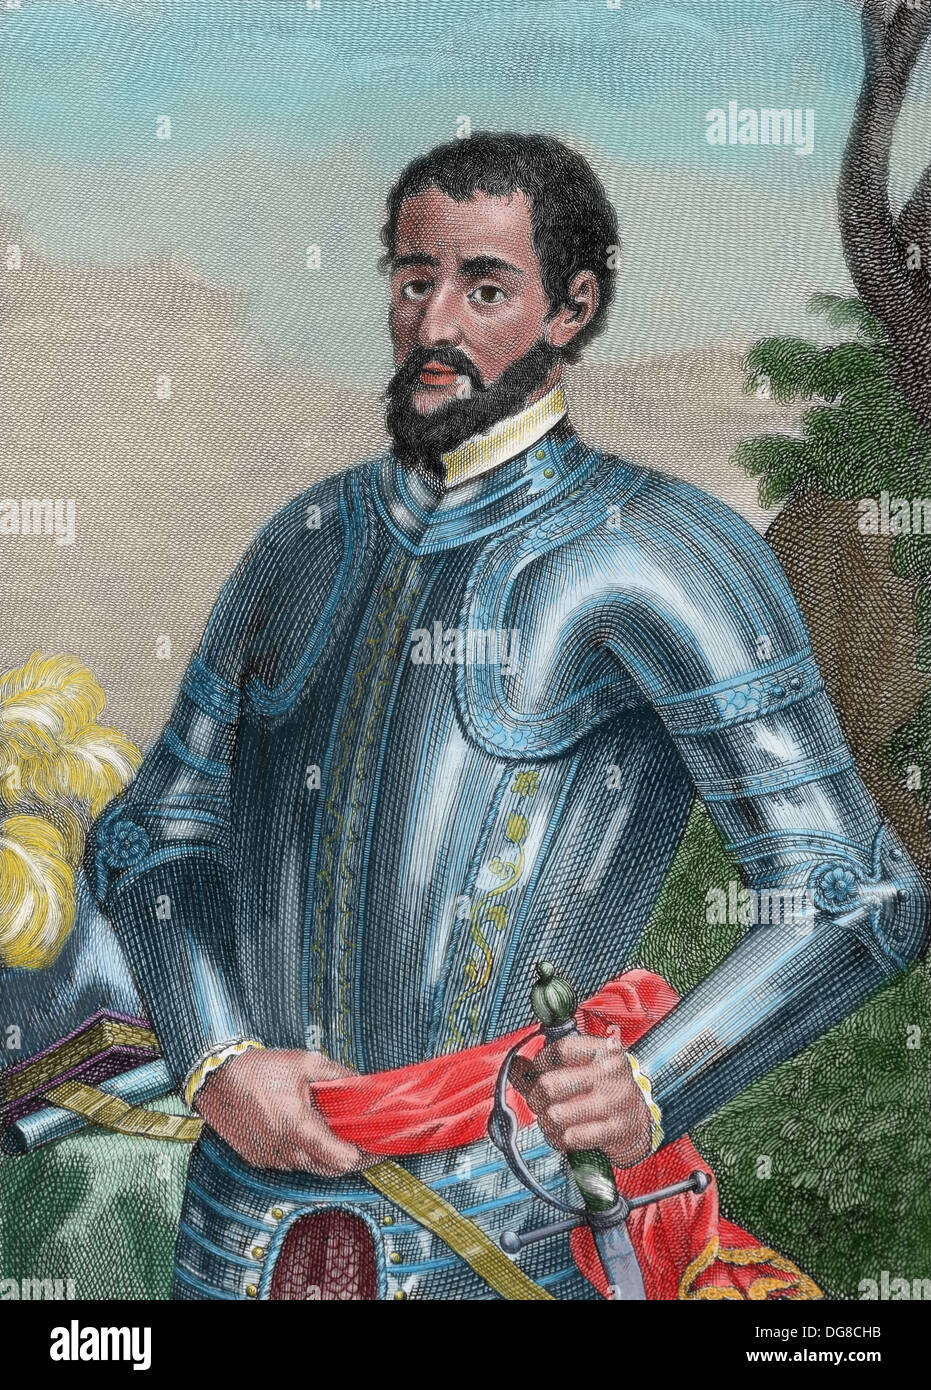 Hernando de Soto (1496/1497-1542). Spanish explorer and conquistador. Engraving. Colored. Stock Photo